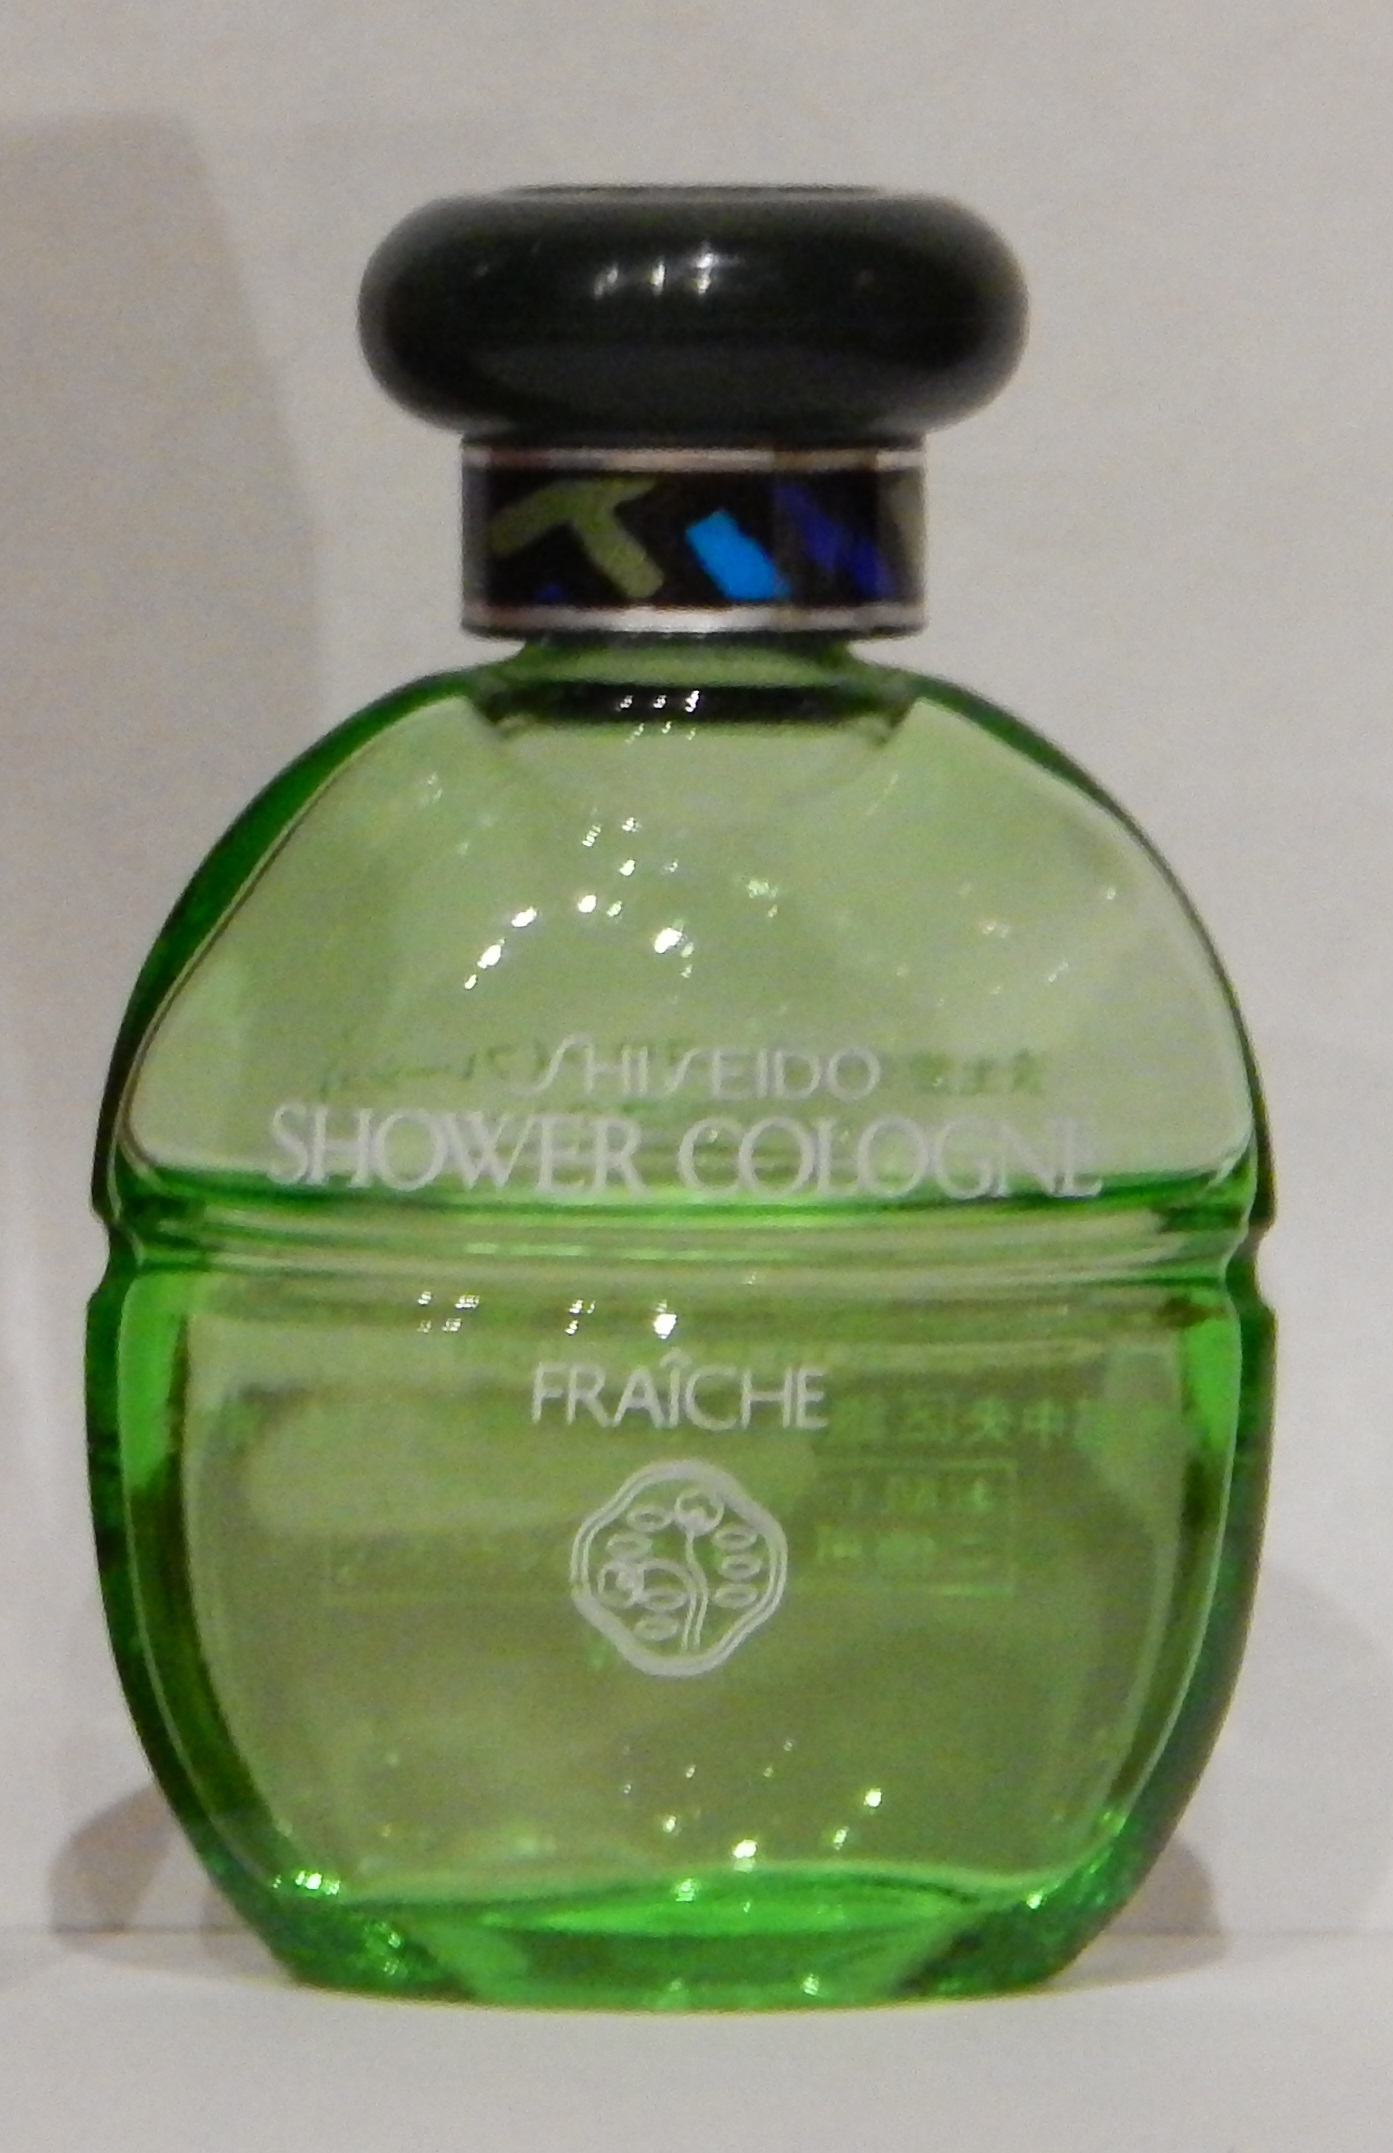 Shower cologne. Shower Cologne Set (Shiseido) отзывы.